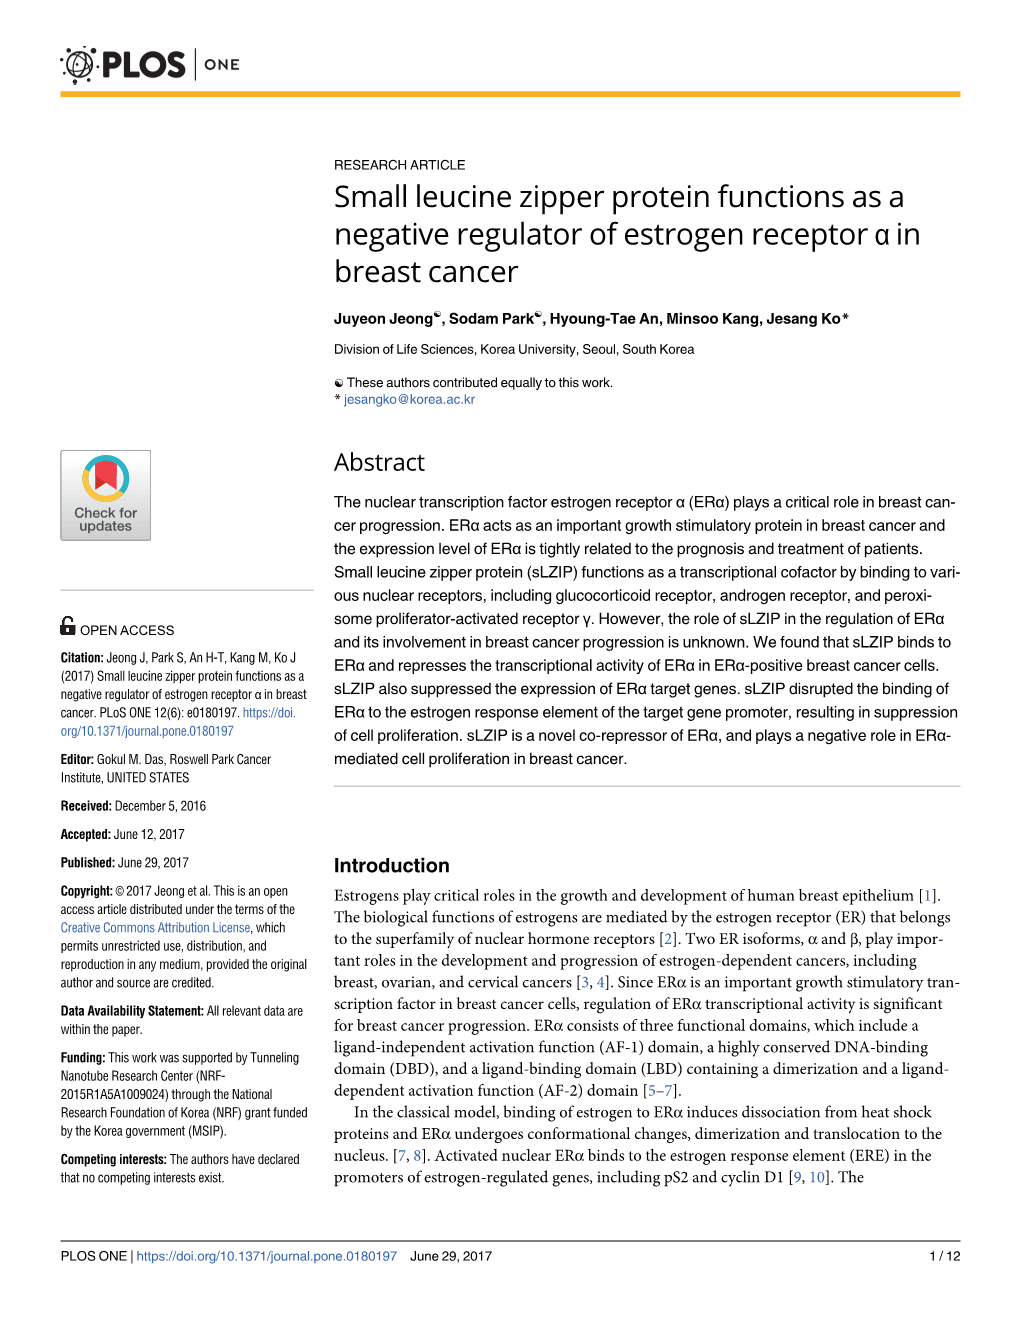 Small Leucine Zipper Protein Functions As a Negative Regulator of Estrogen Receptor Α in Breast Cancer